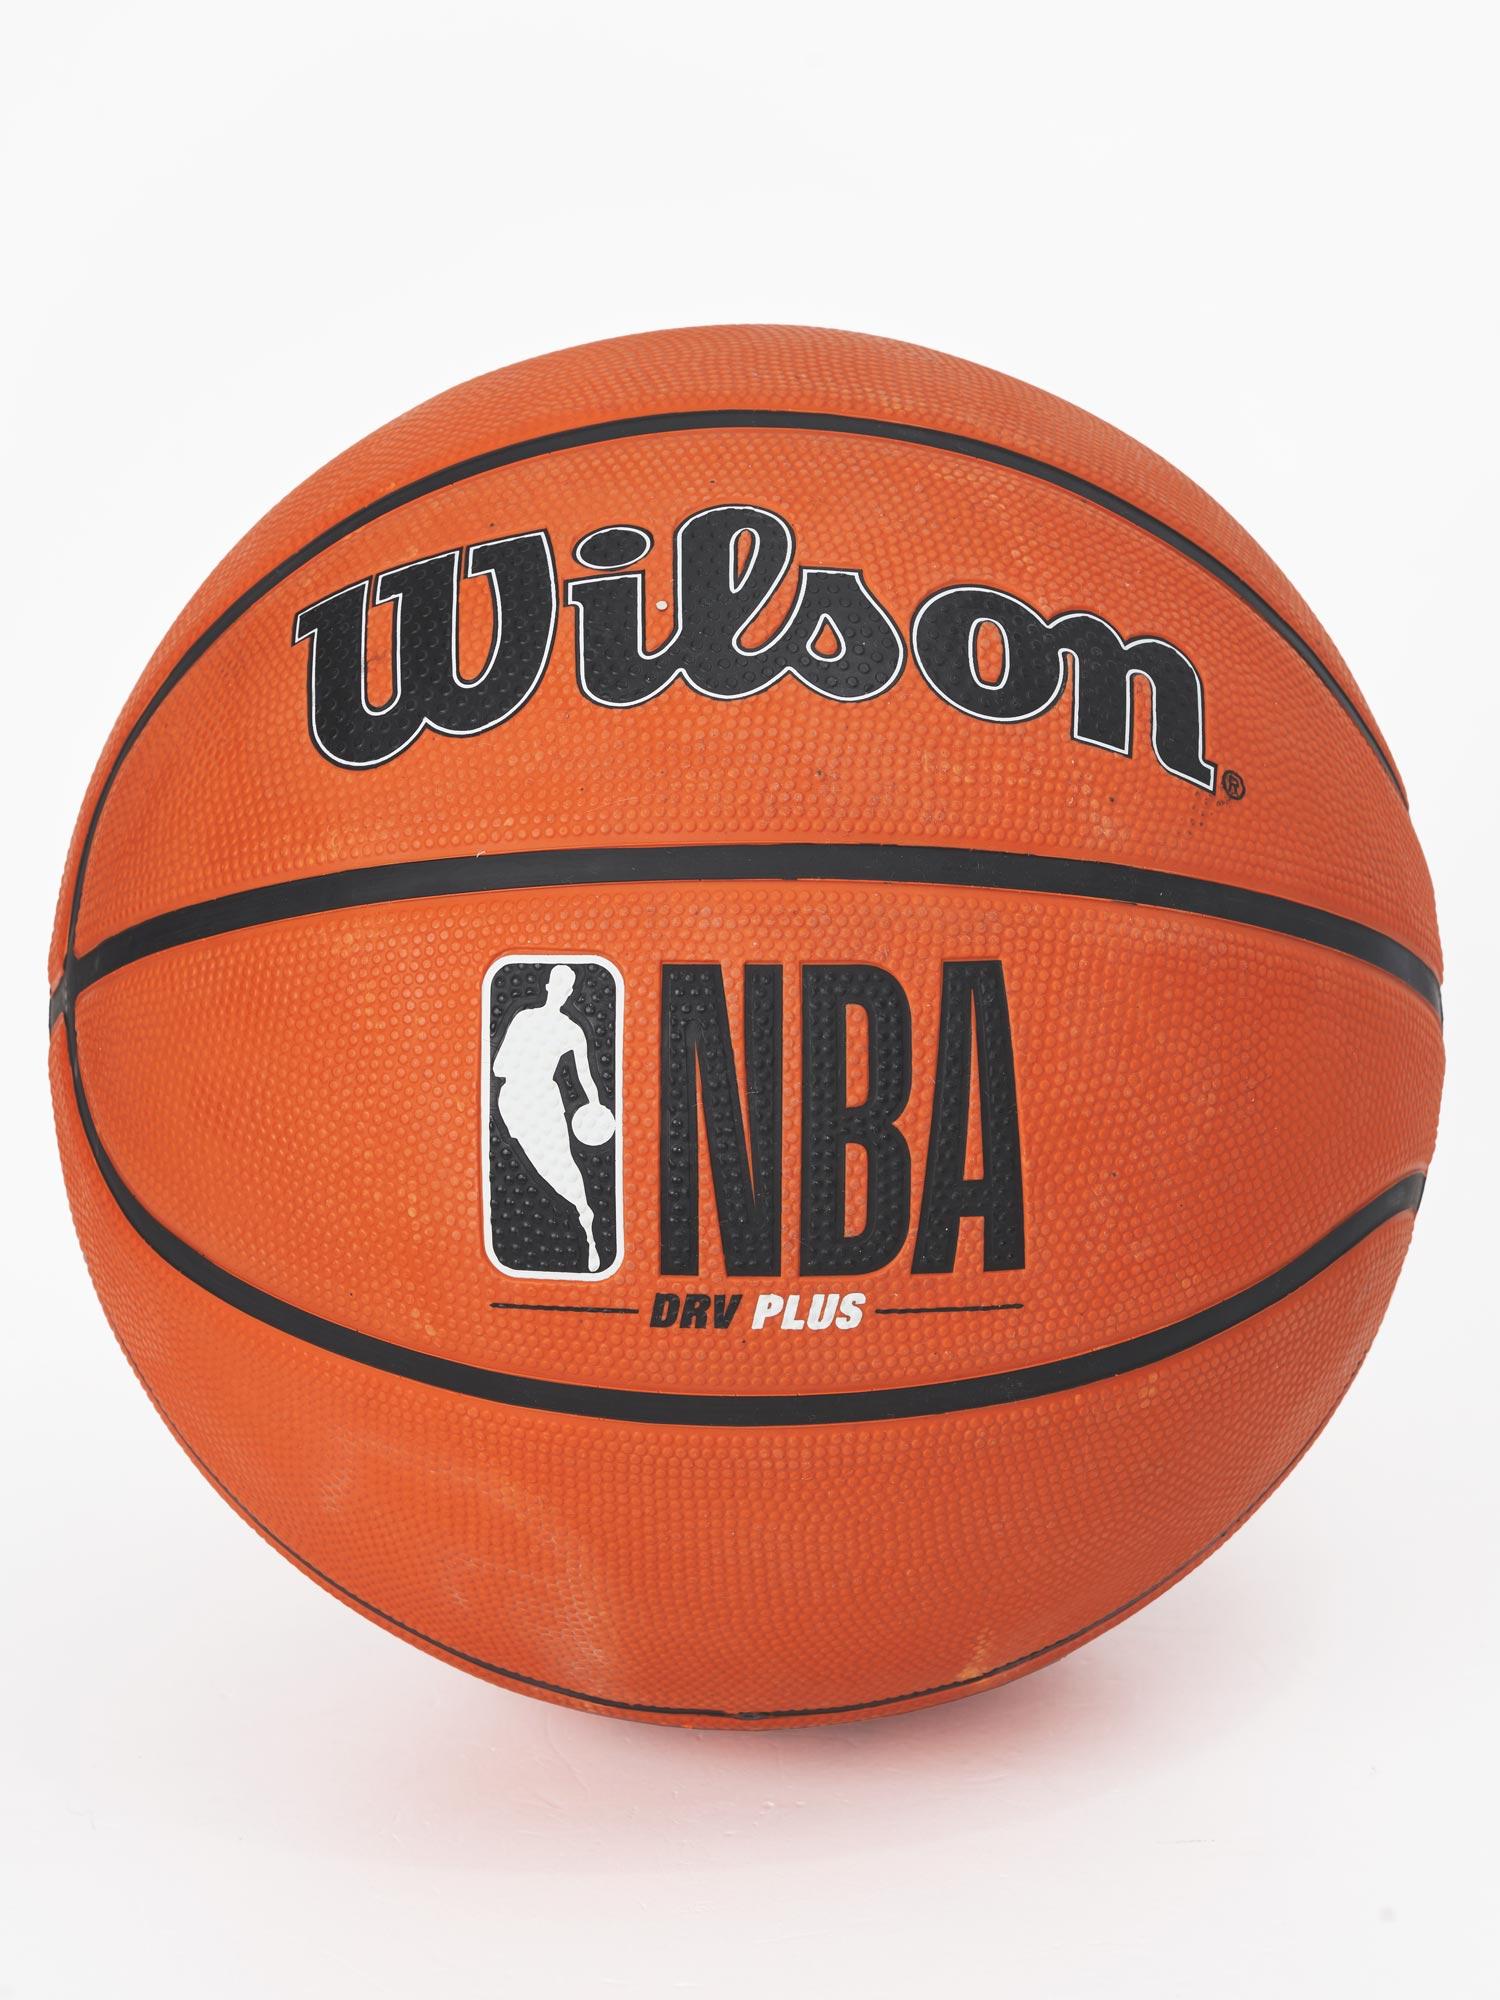 Selected image for WILSON Košarkaška lopta NBA DRV PLUS braon